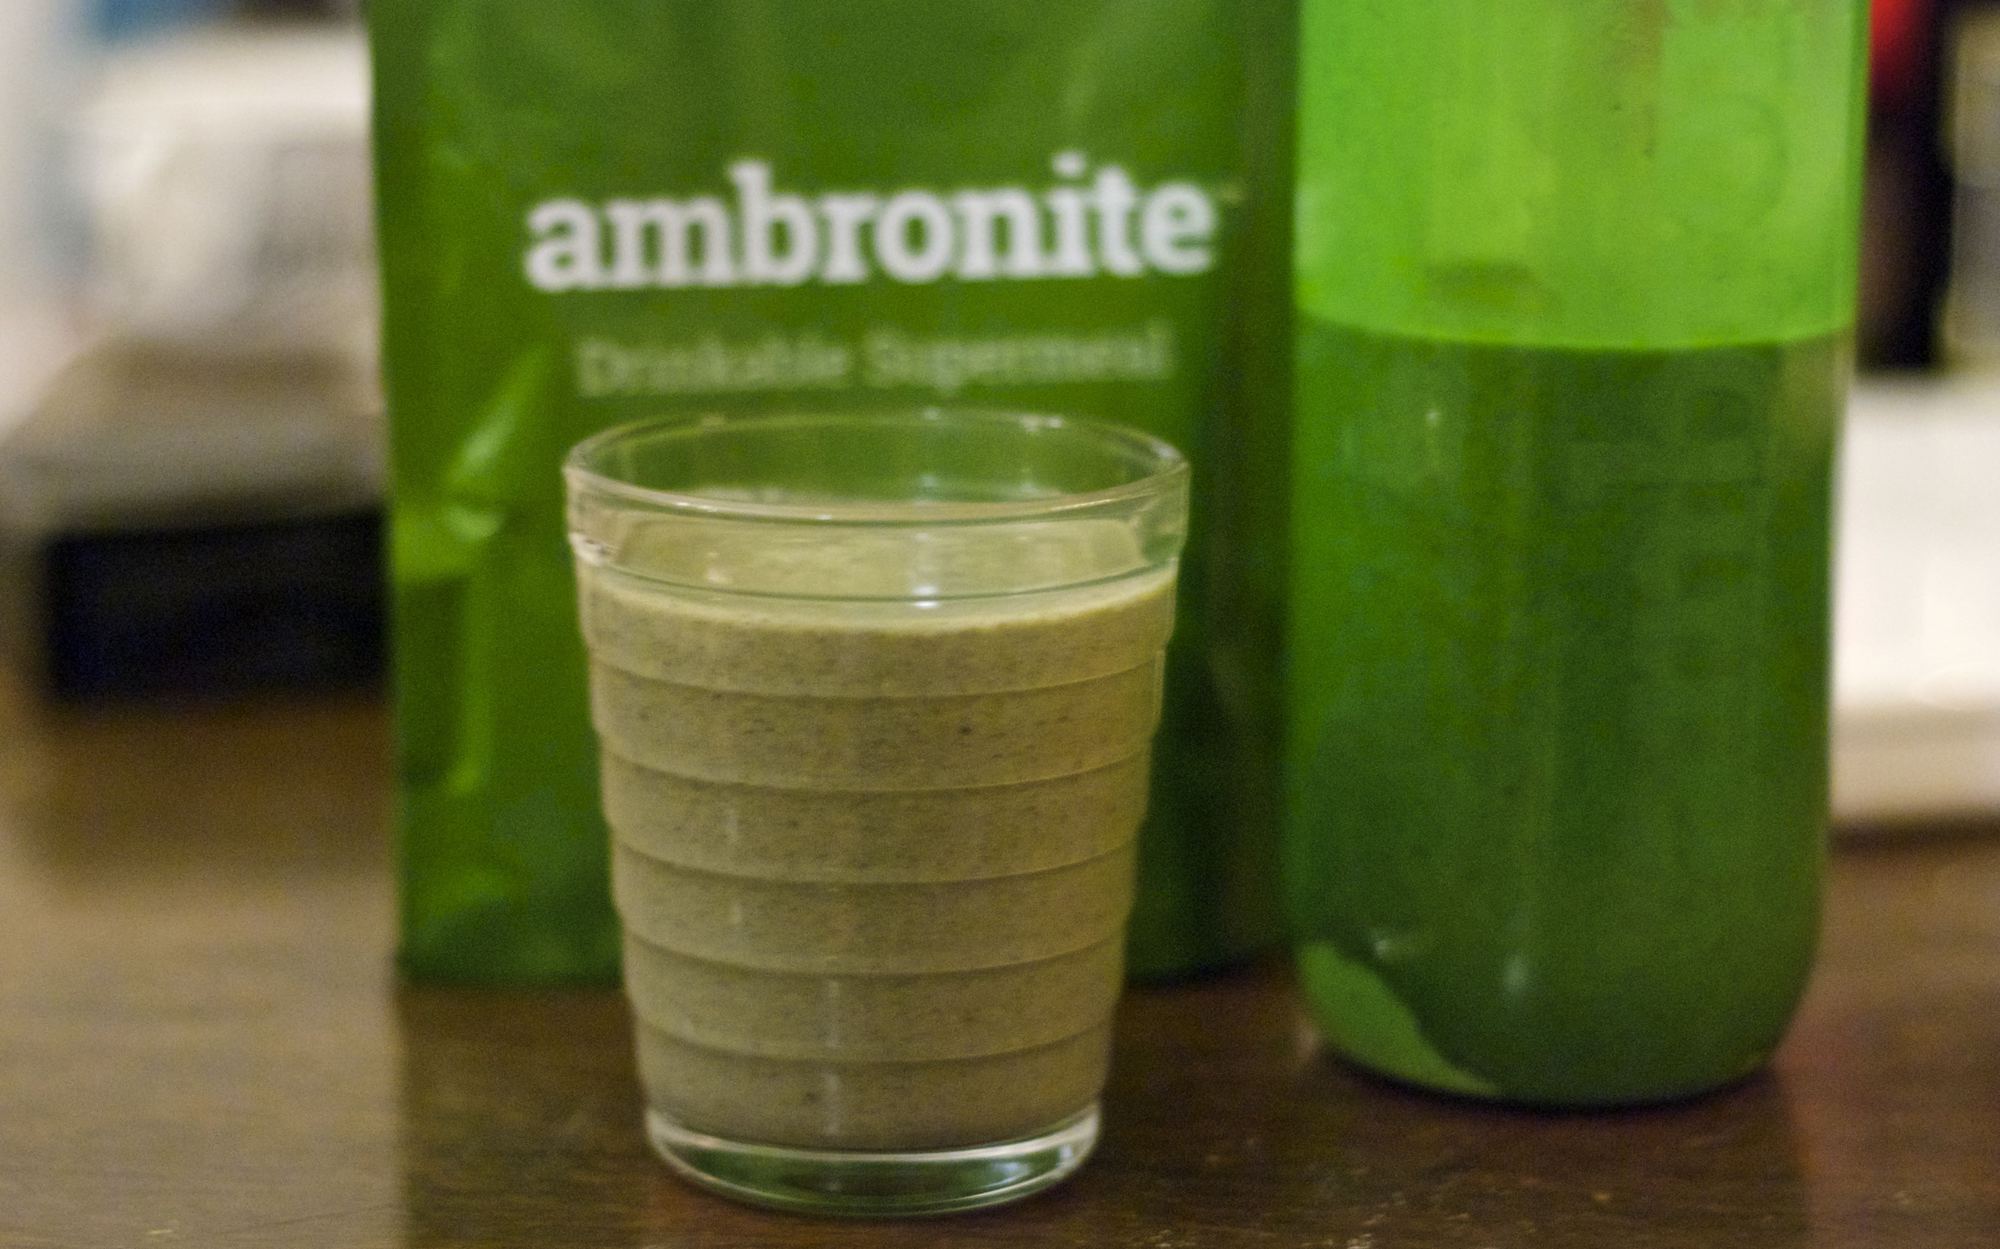 A glass of Ambronite